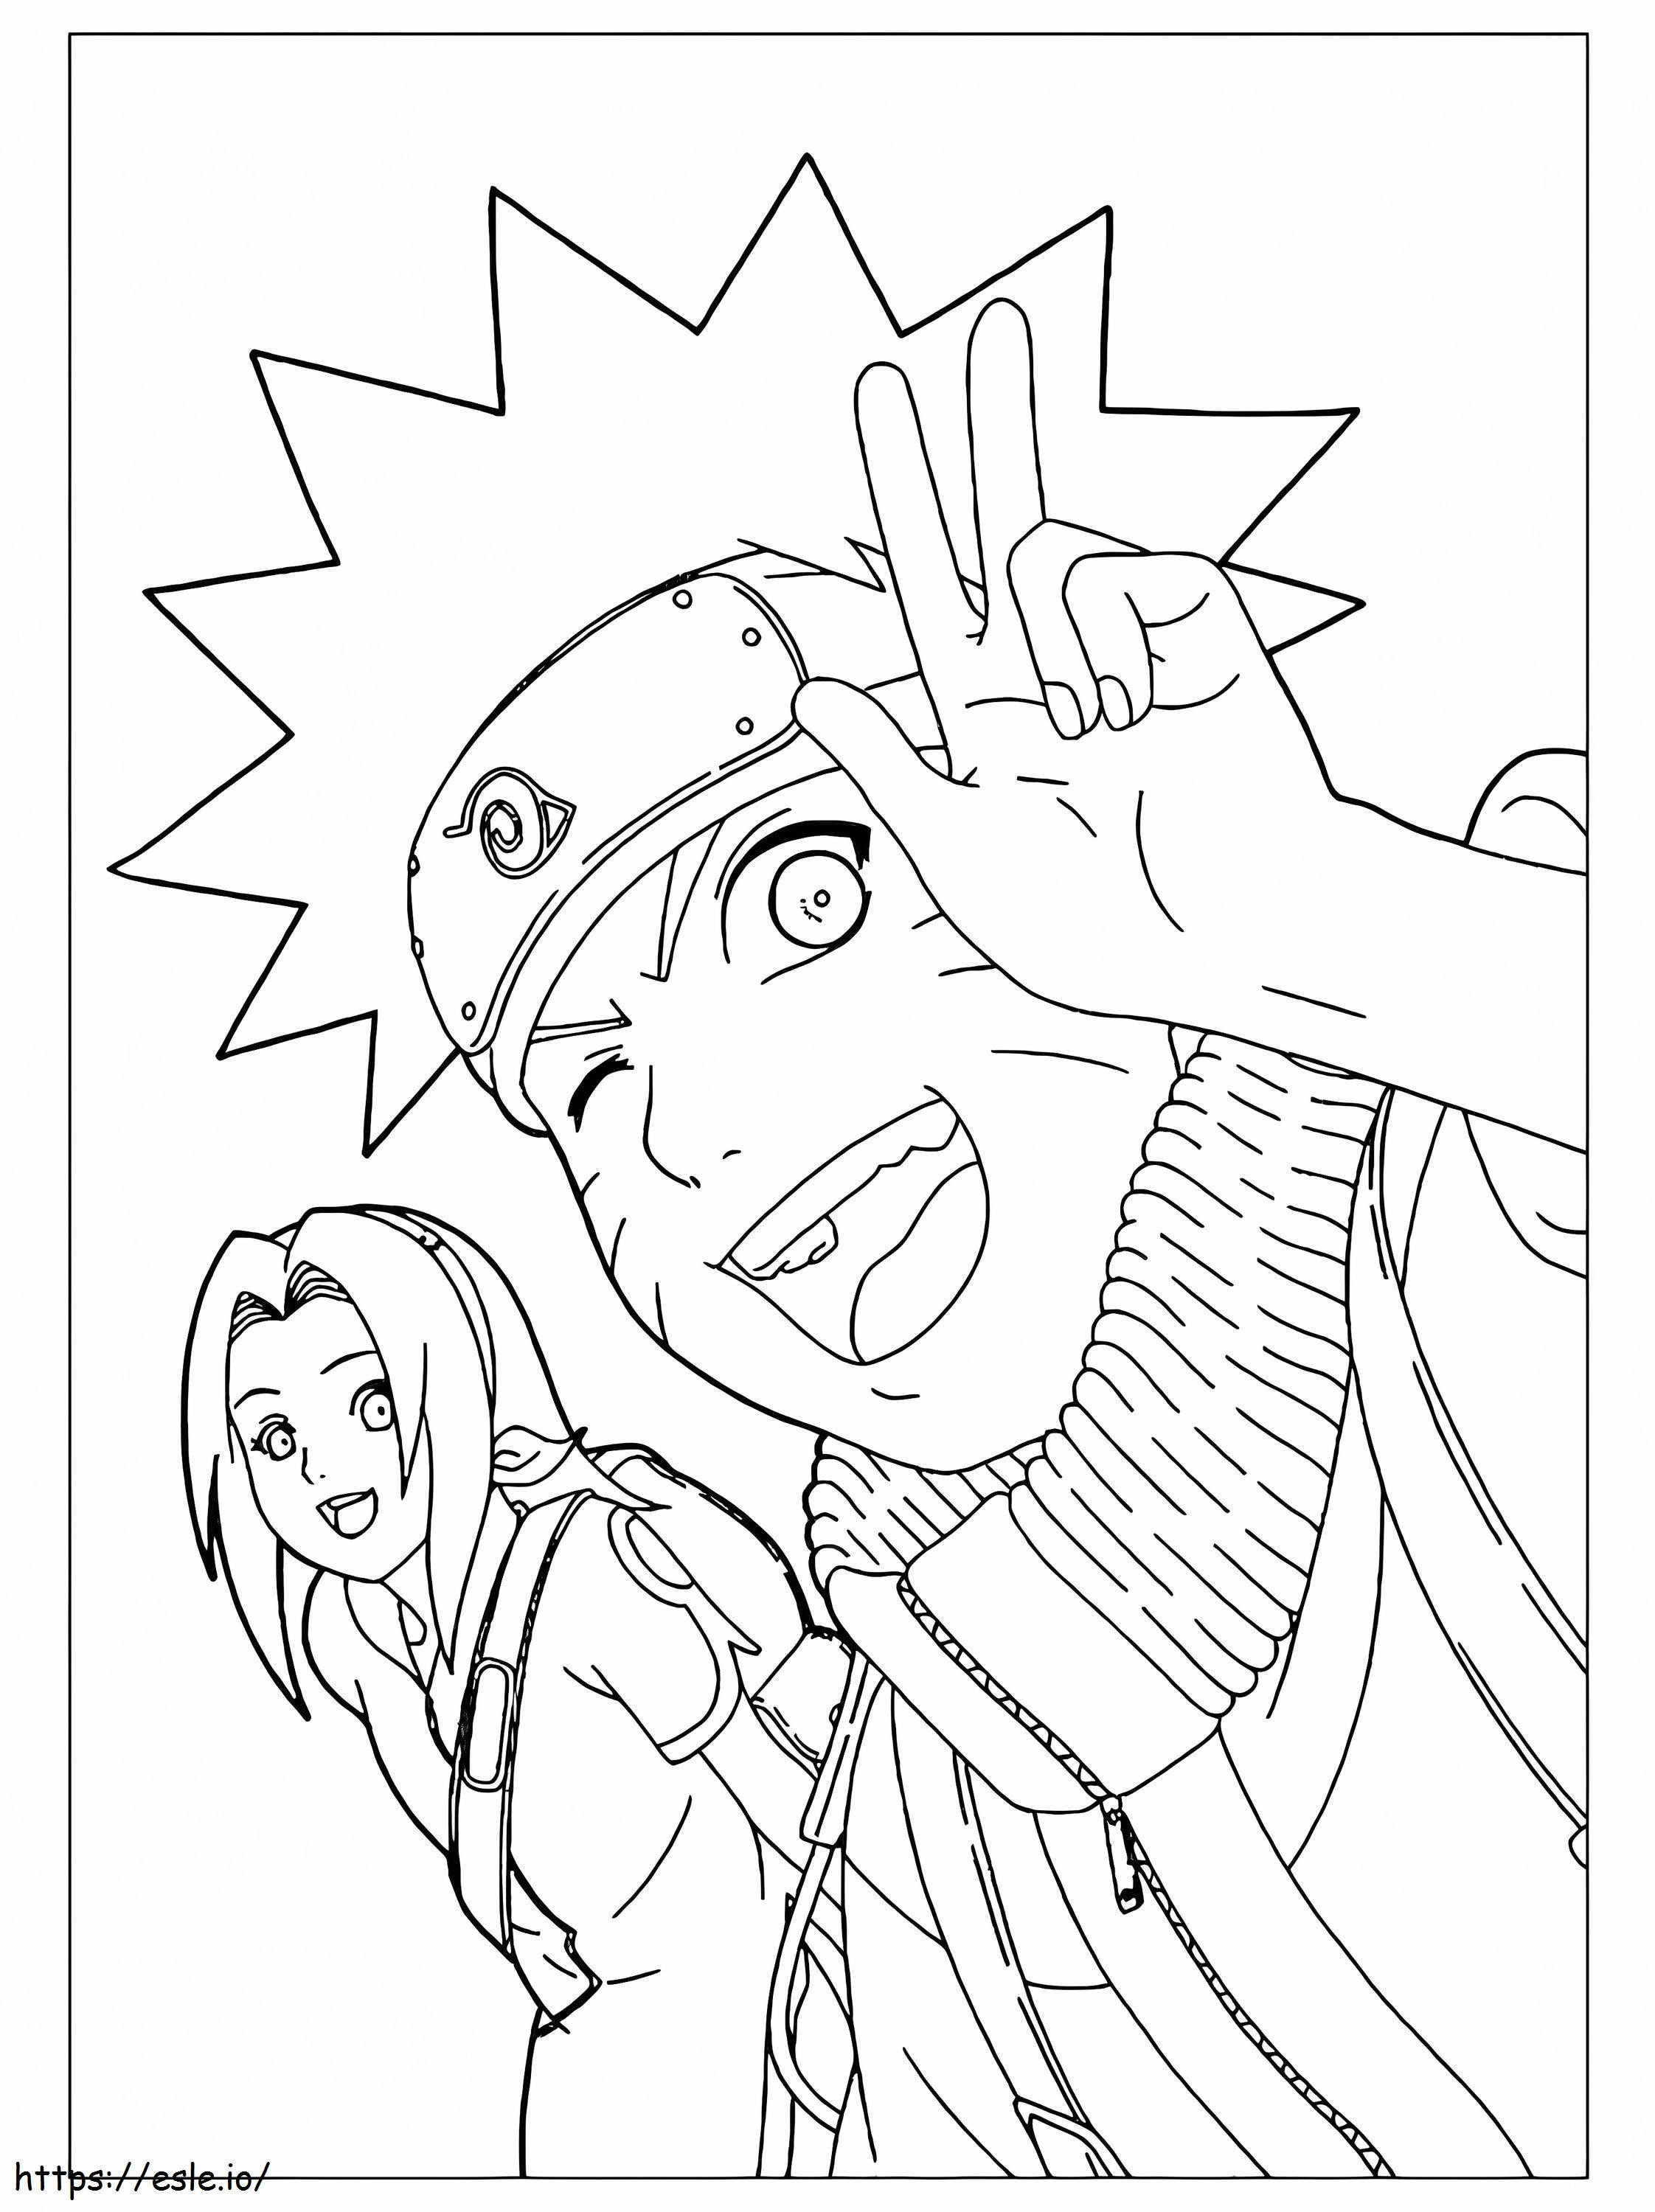 Coloriage Naruto et Sakura 766X1024 à imprimer dessin